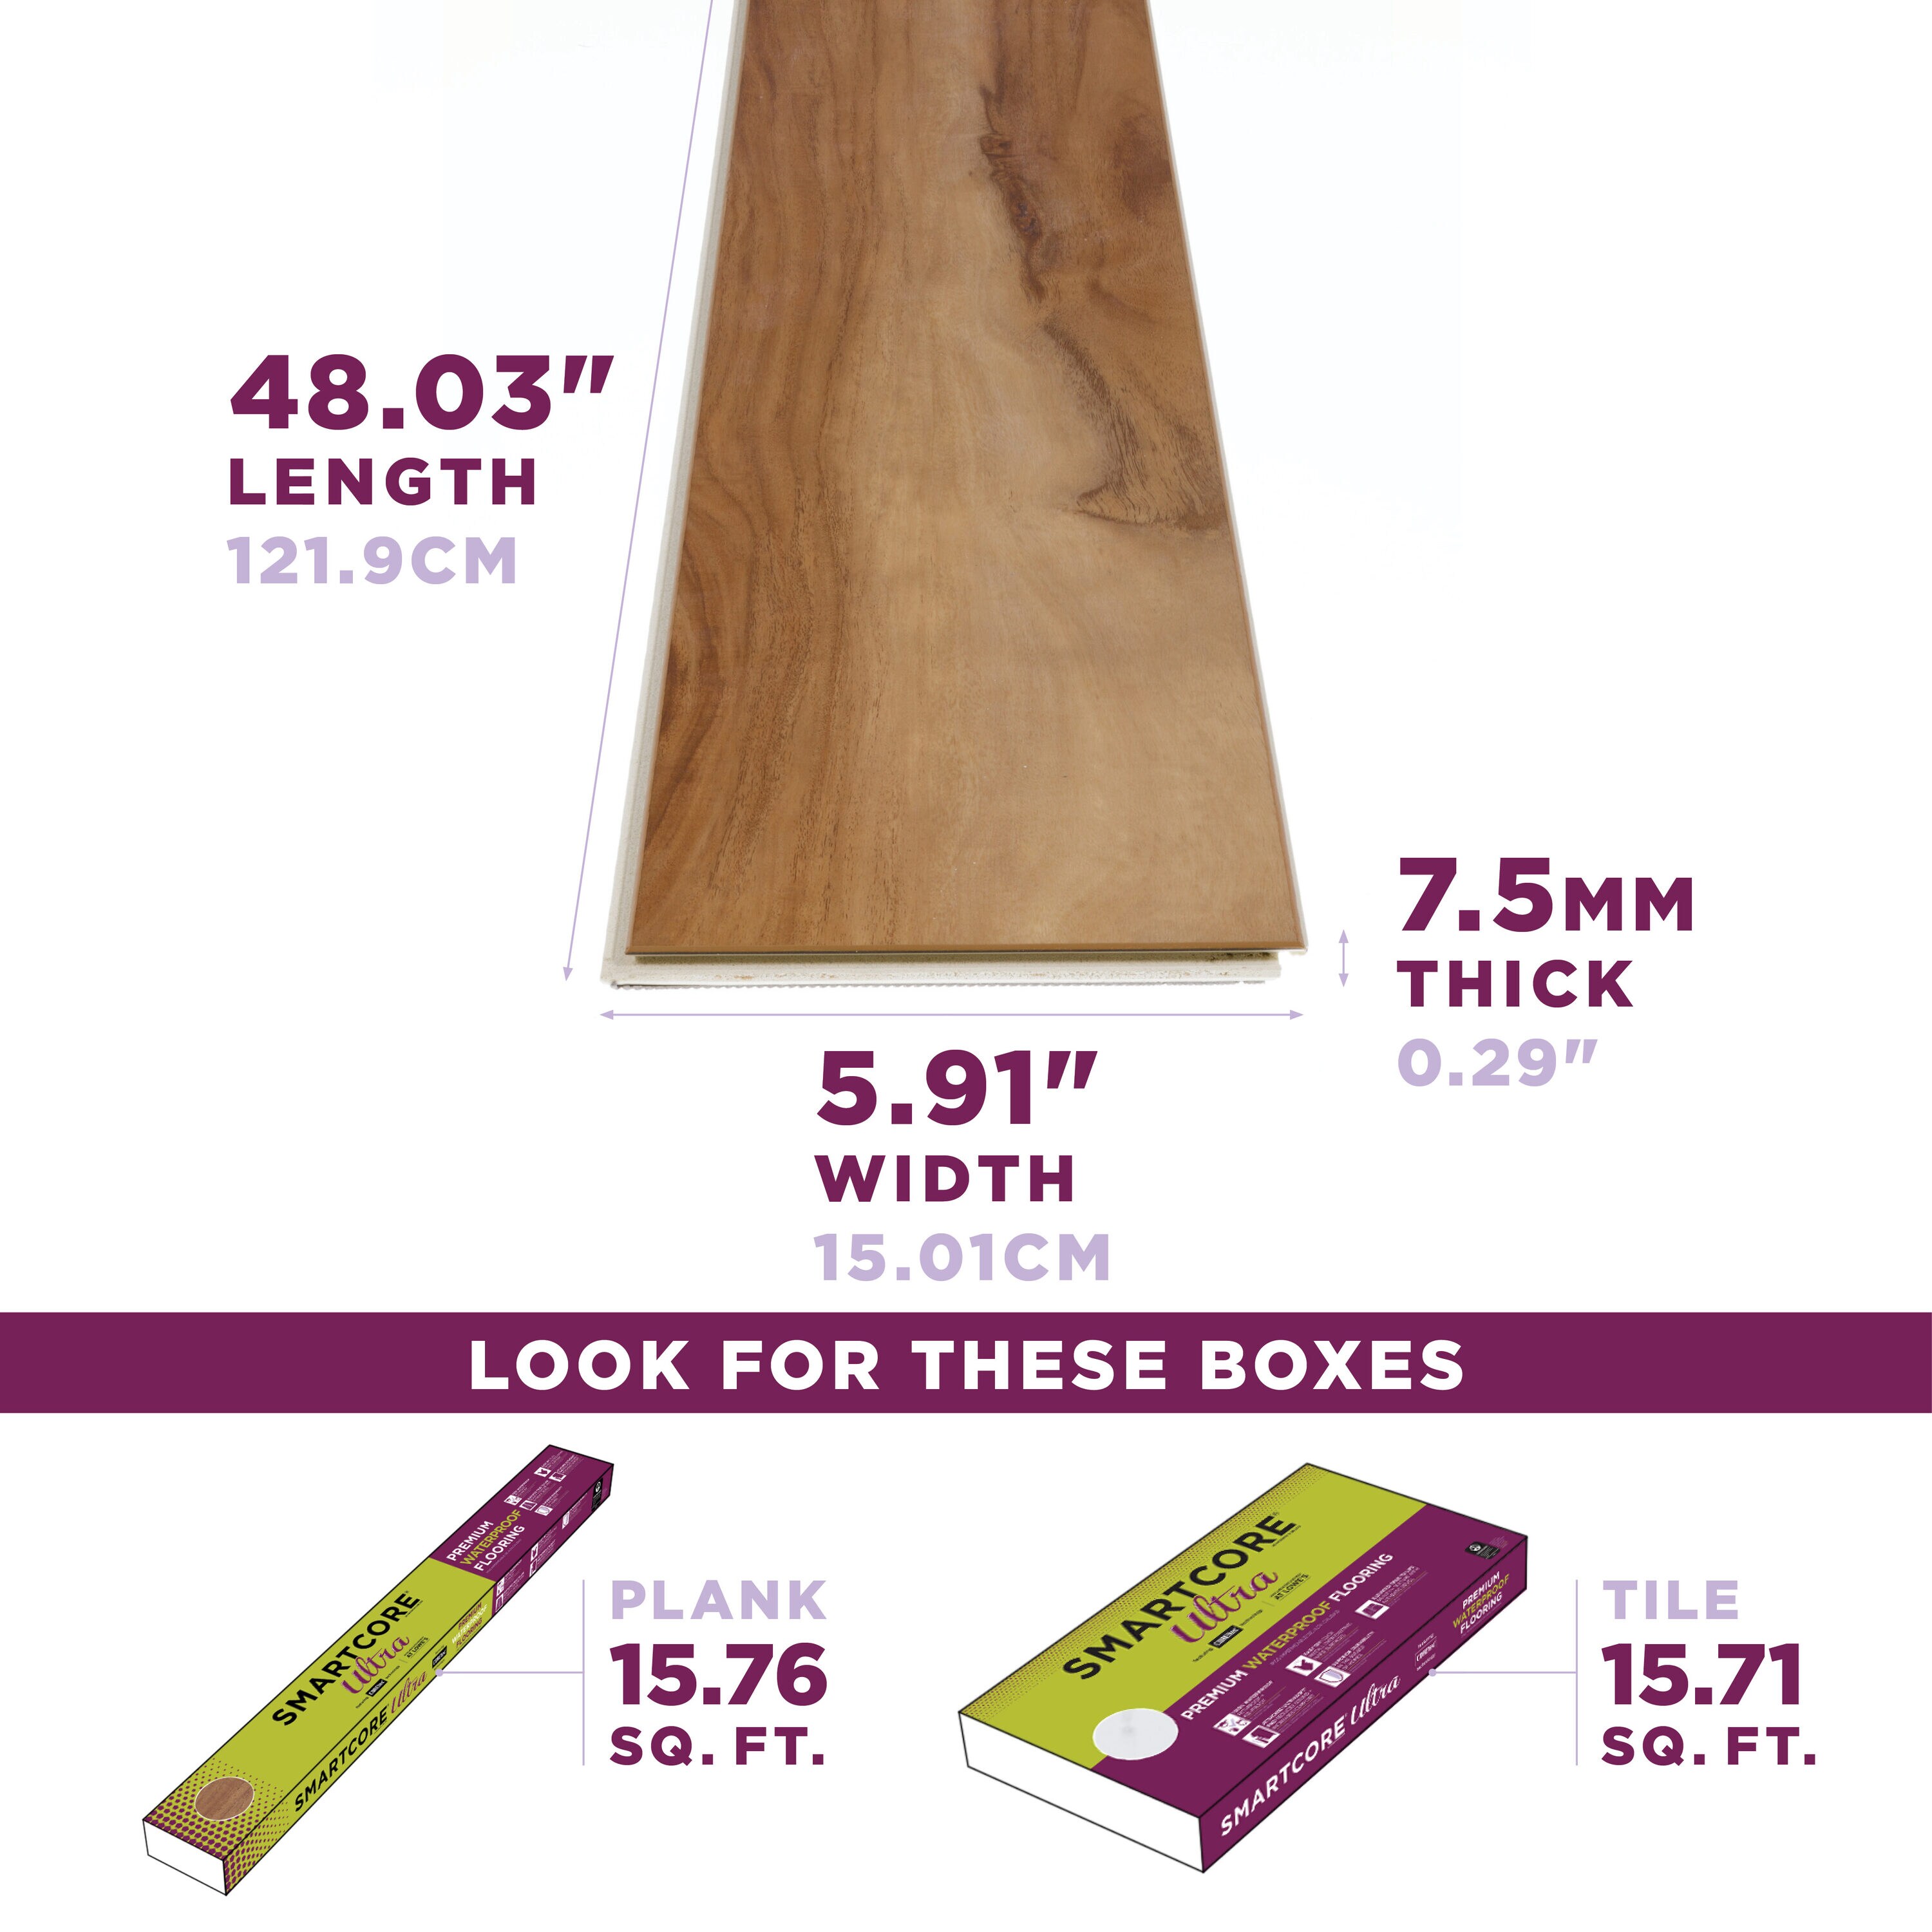 Ambient - Rigid Core Luxury Vinyl Plank, Waterproof LVP Flooring Sample,  Color: Wilde Acacia : : Home Improvement